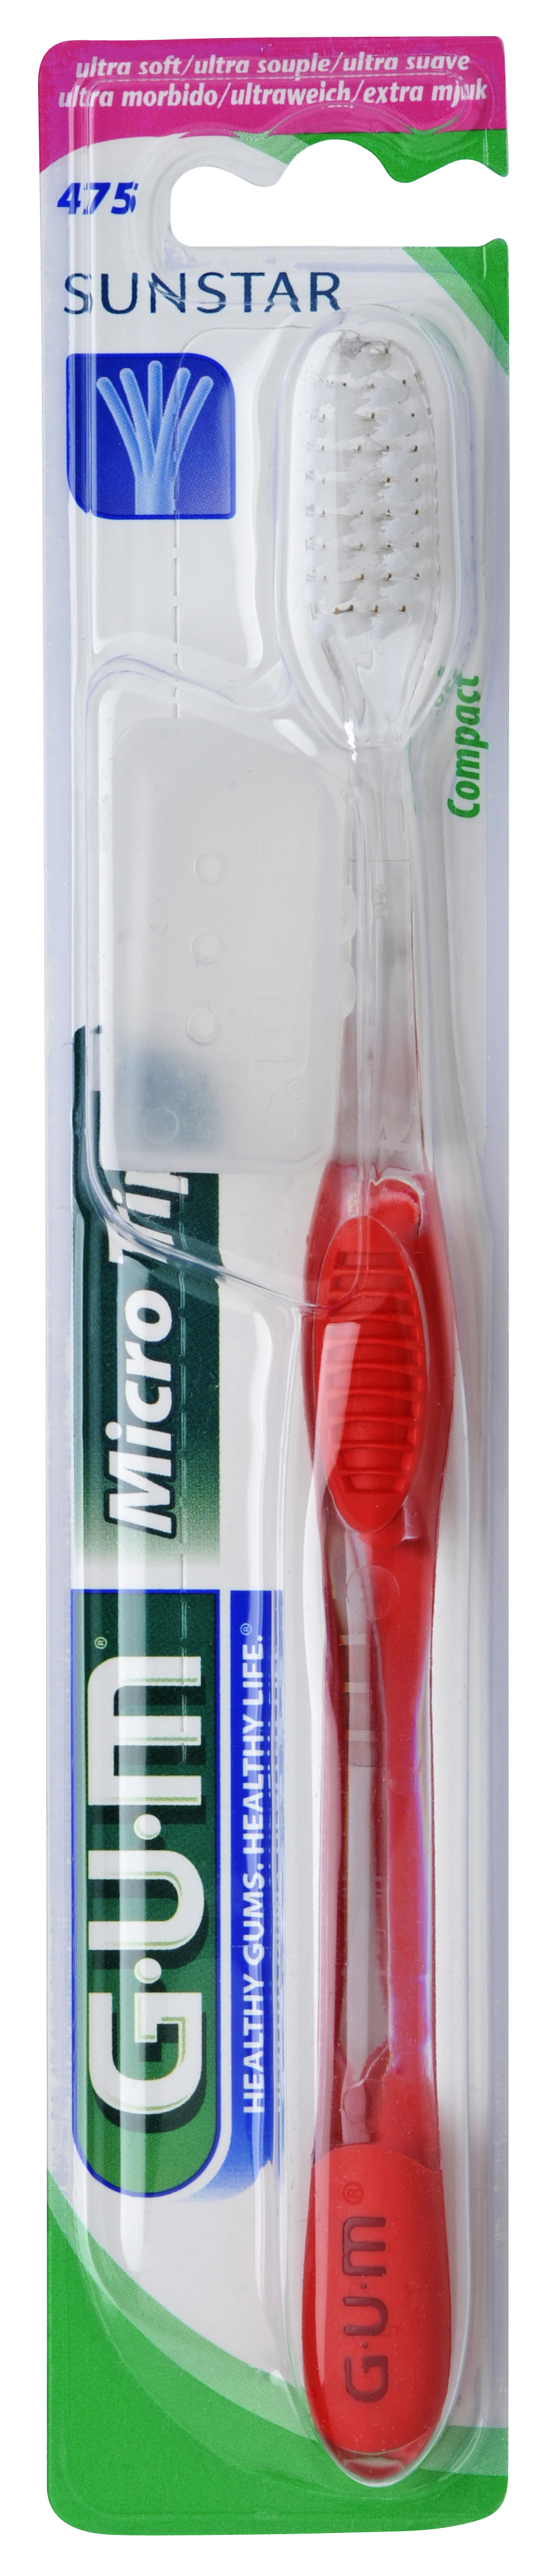 475 G·U·M Micro Tip Toothbrush Sensitive Compact